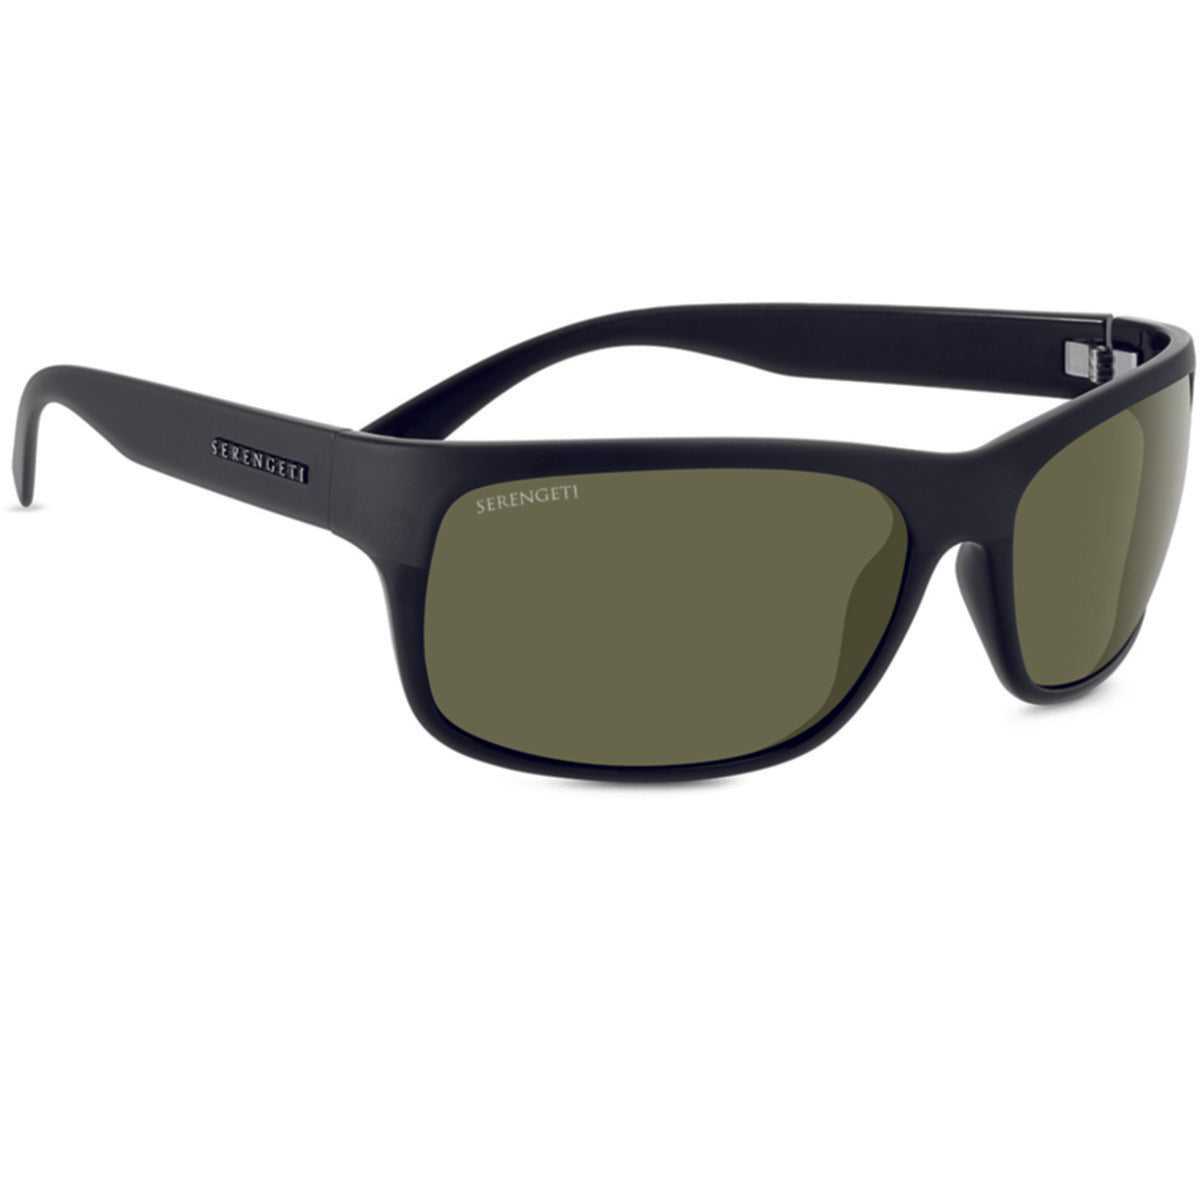 Serengeti Pistoia Sunglasses  Black Matte Shiny Medium, Large